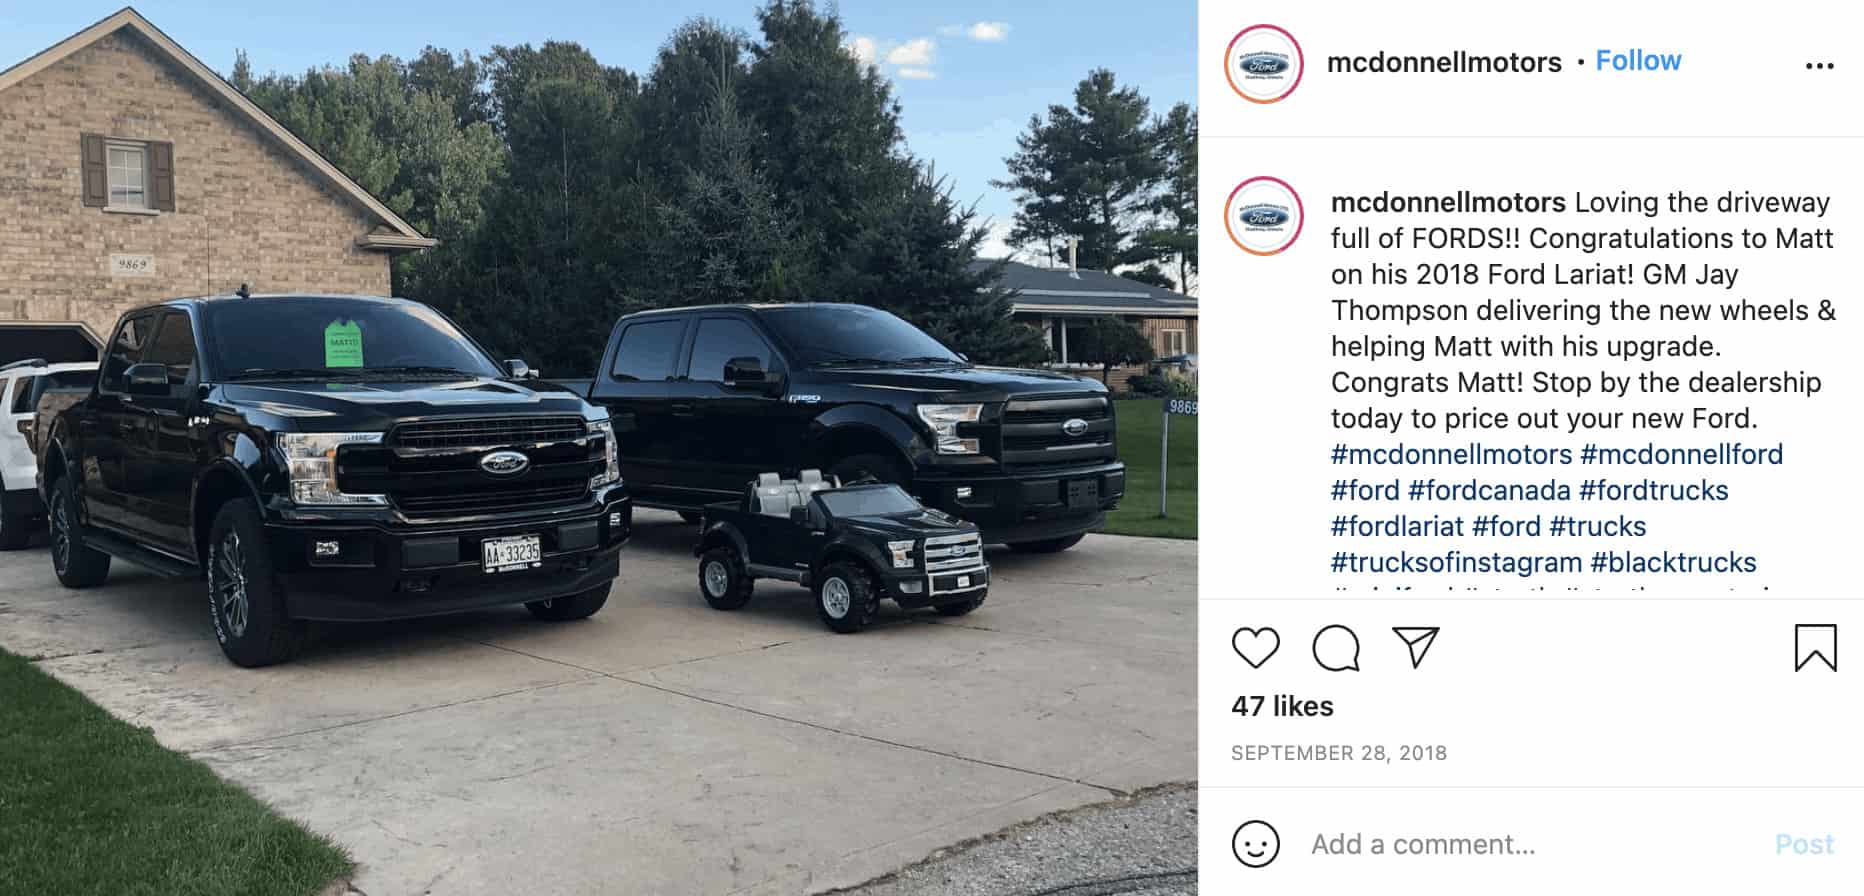 mcdonnellmotors instagram target audience includes truck lovers